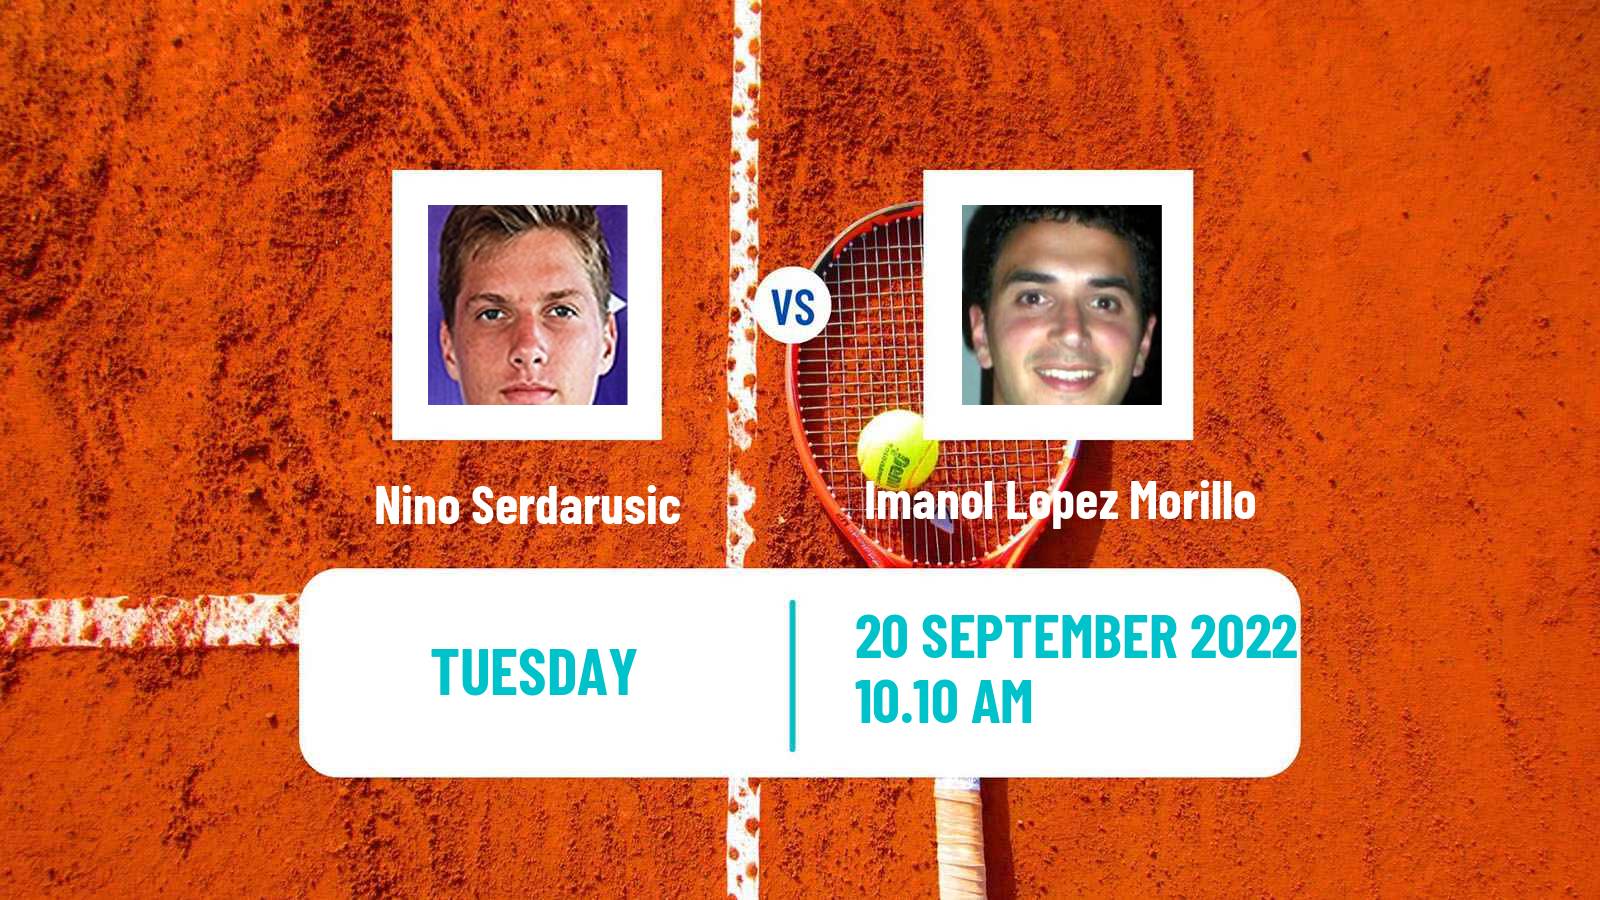 Tennis ATP Challenger Nino Serdarusic - Imanol Lopez Morillo